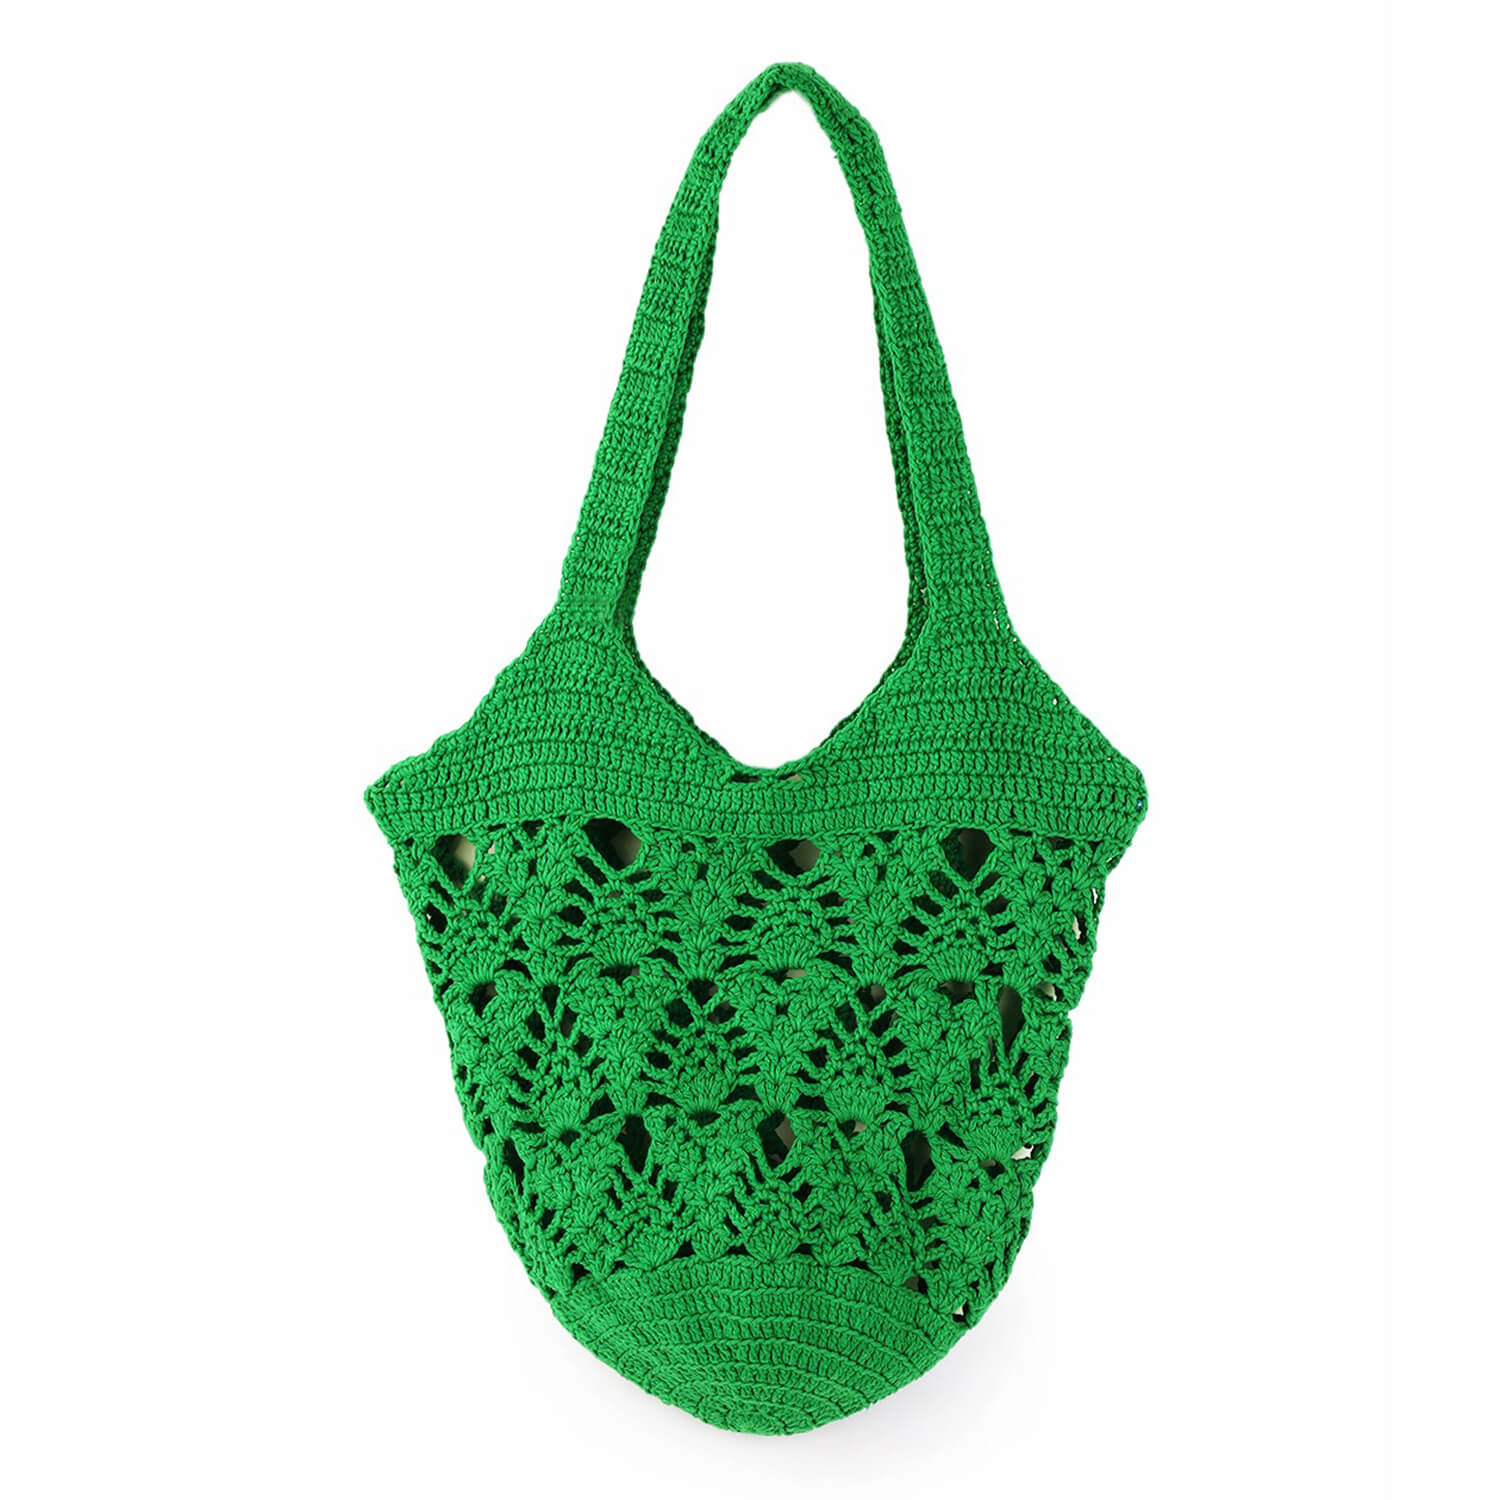 Handmade Crochet Market Bag - Green 2688